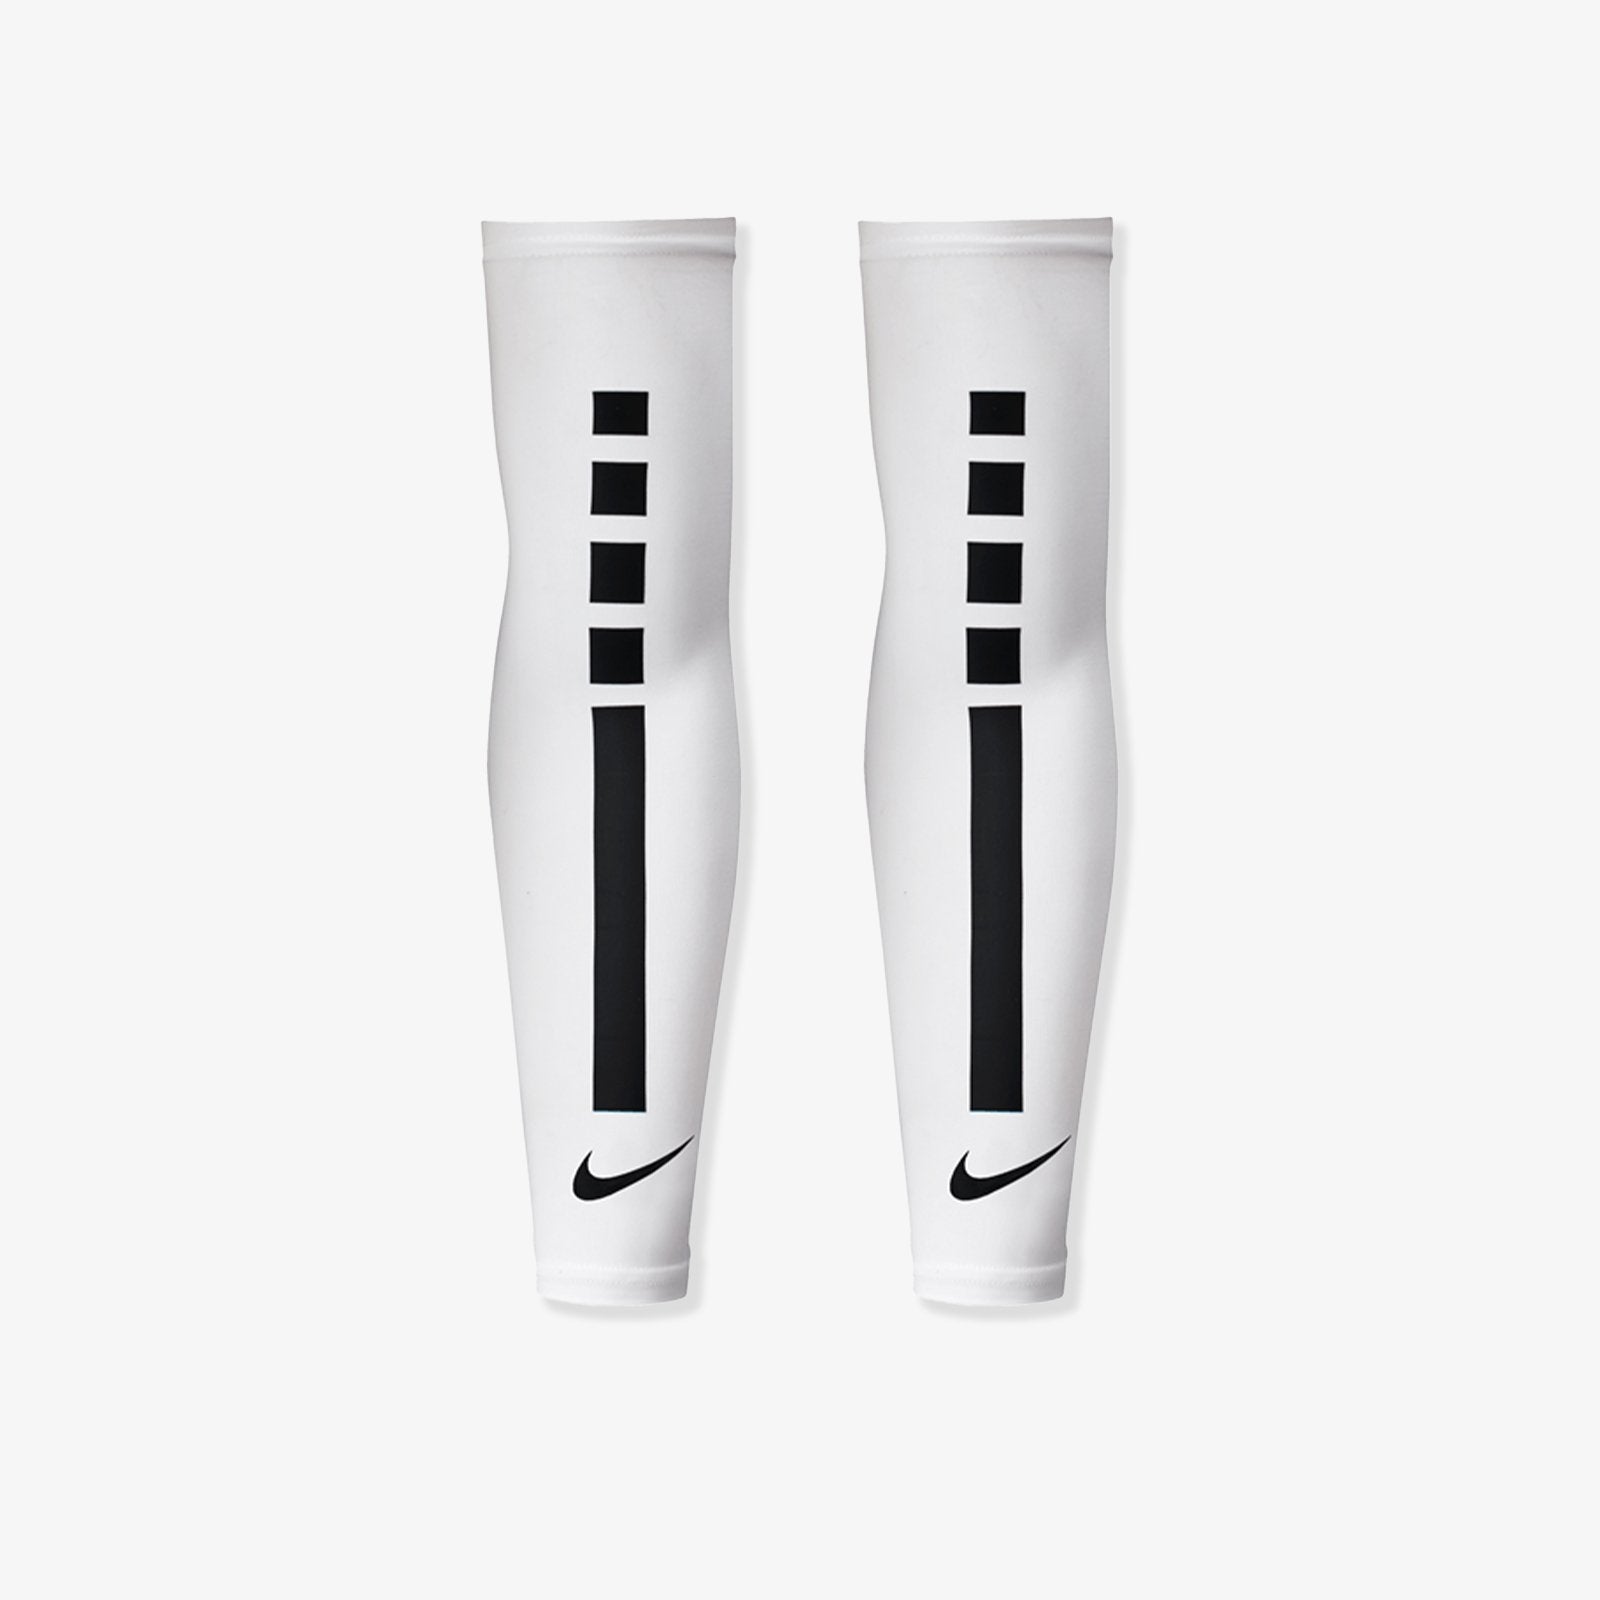 Nike pro elite Kenya arm sleeves S size - エクササイズ